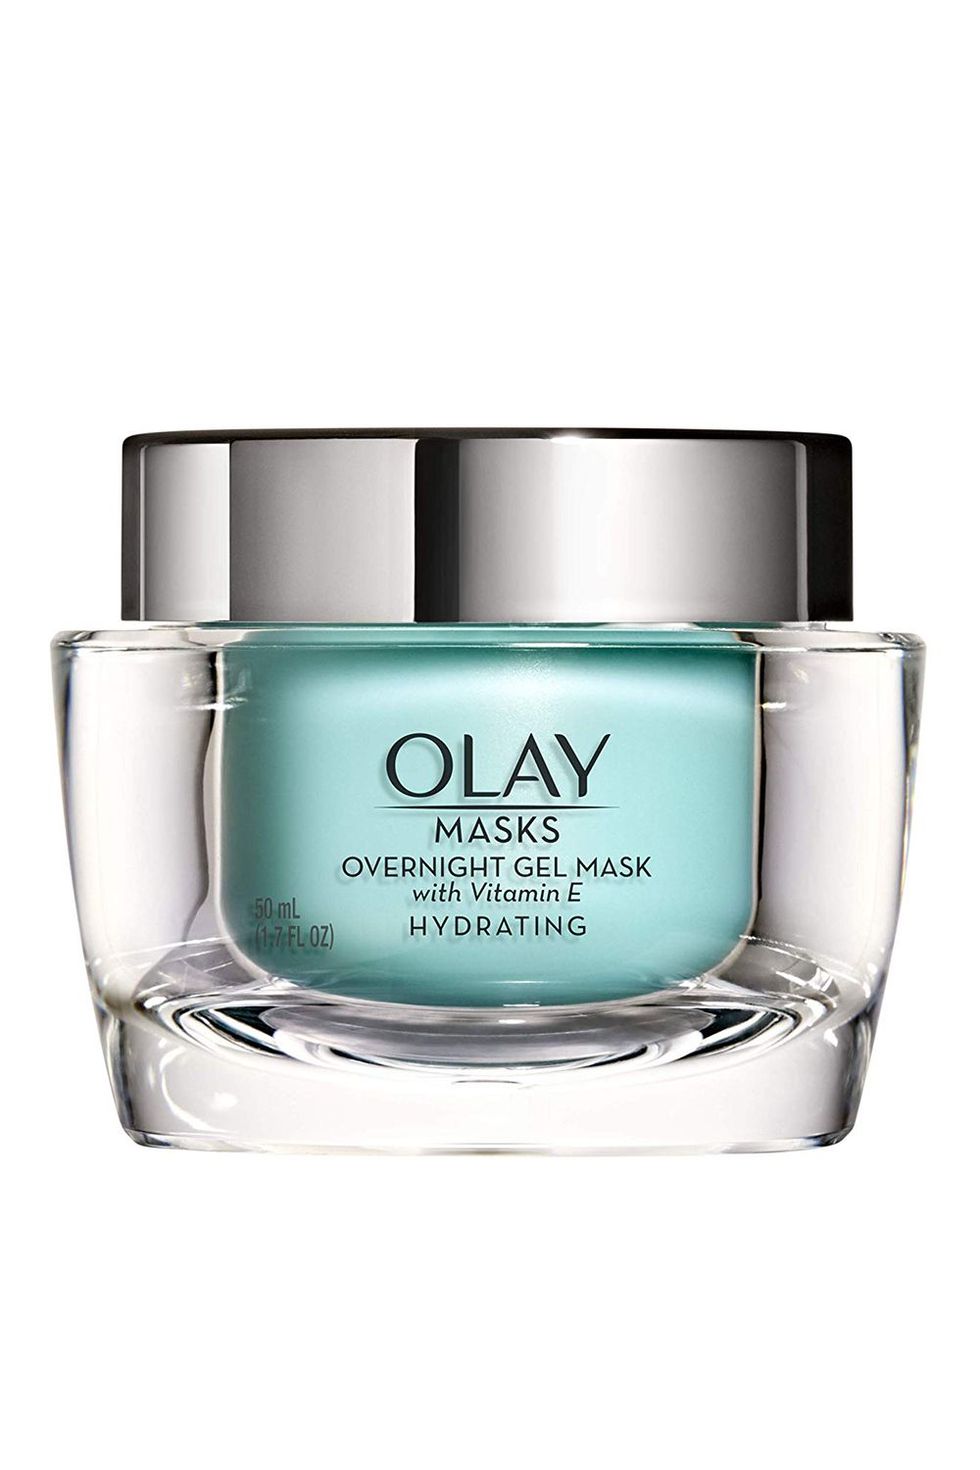 Olay Masks Hydrating Overnight Gel Mask